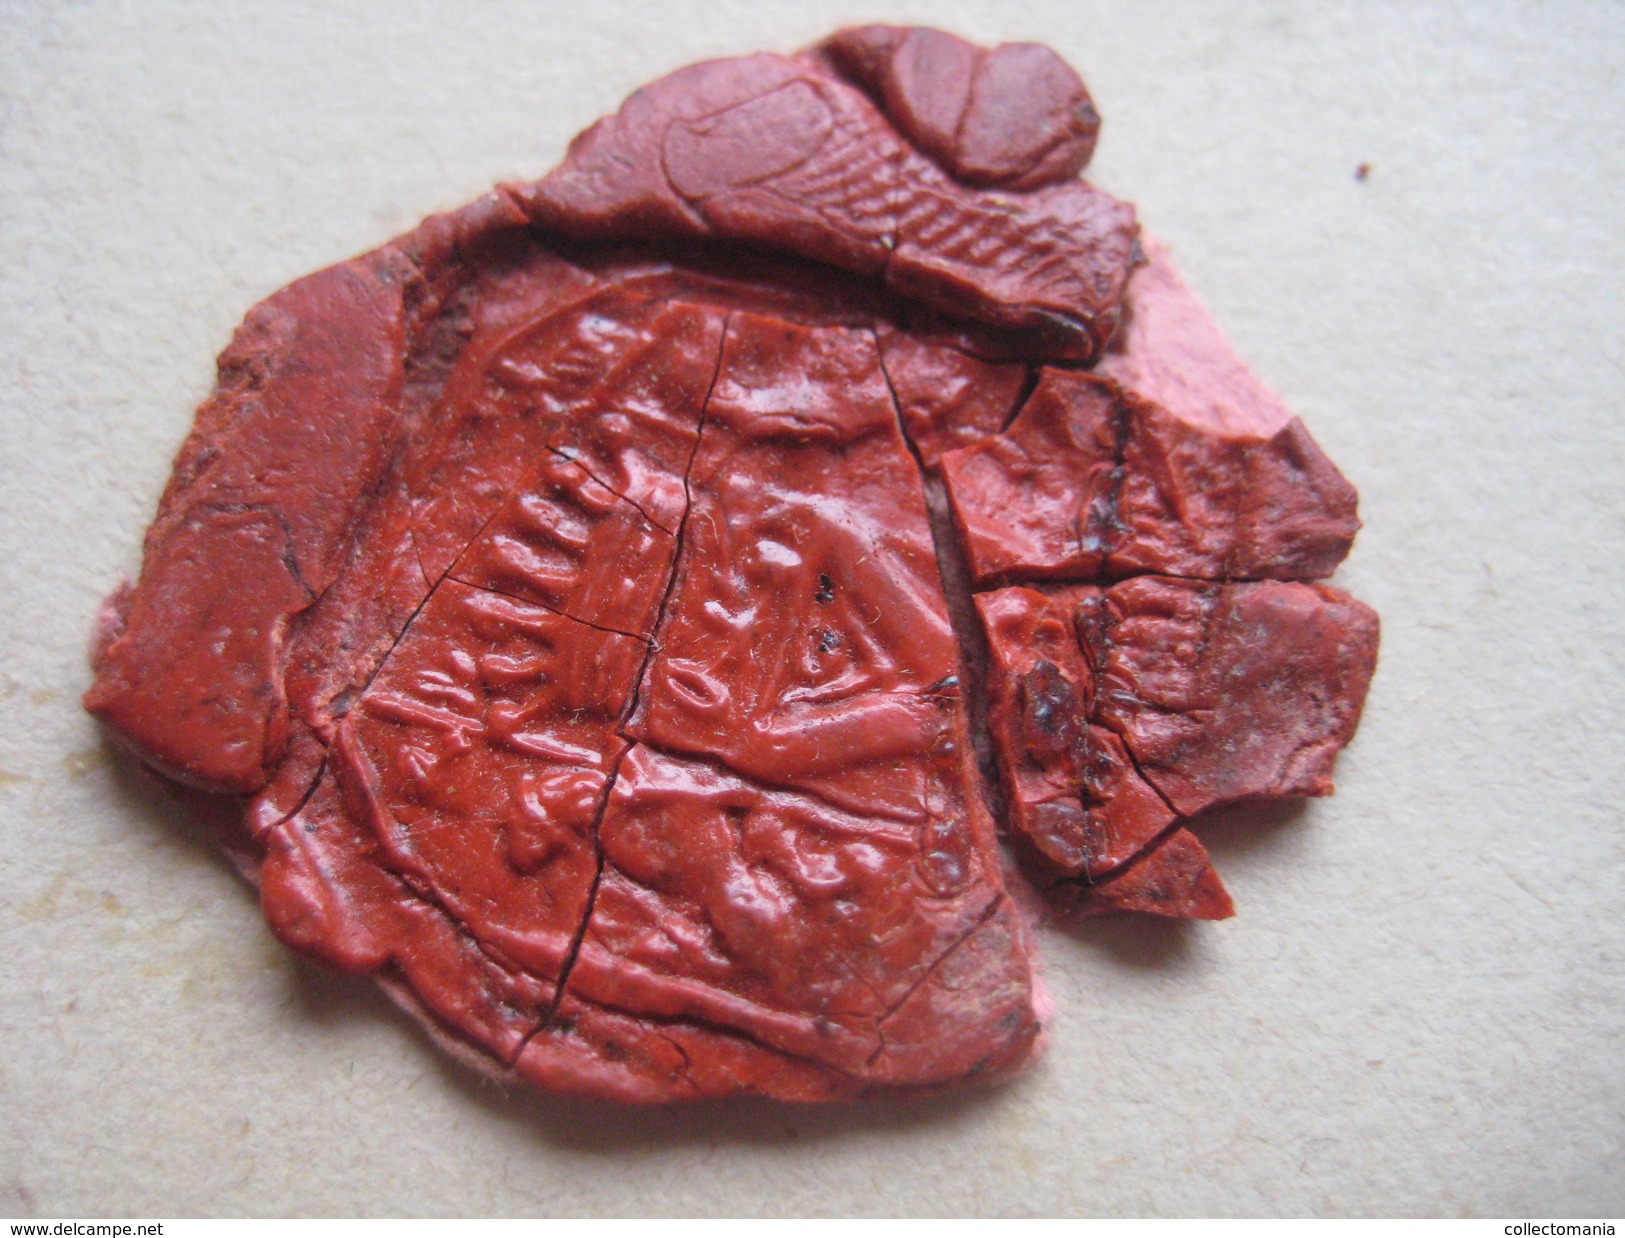 zegels van was - wax seals - lakzegels collection, 2cm à 4cm, before 1900 - sceaux de cire - adel familiekunde